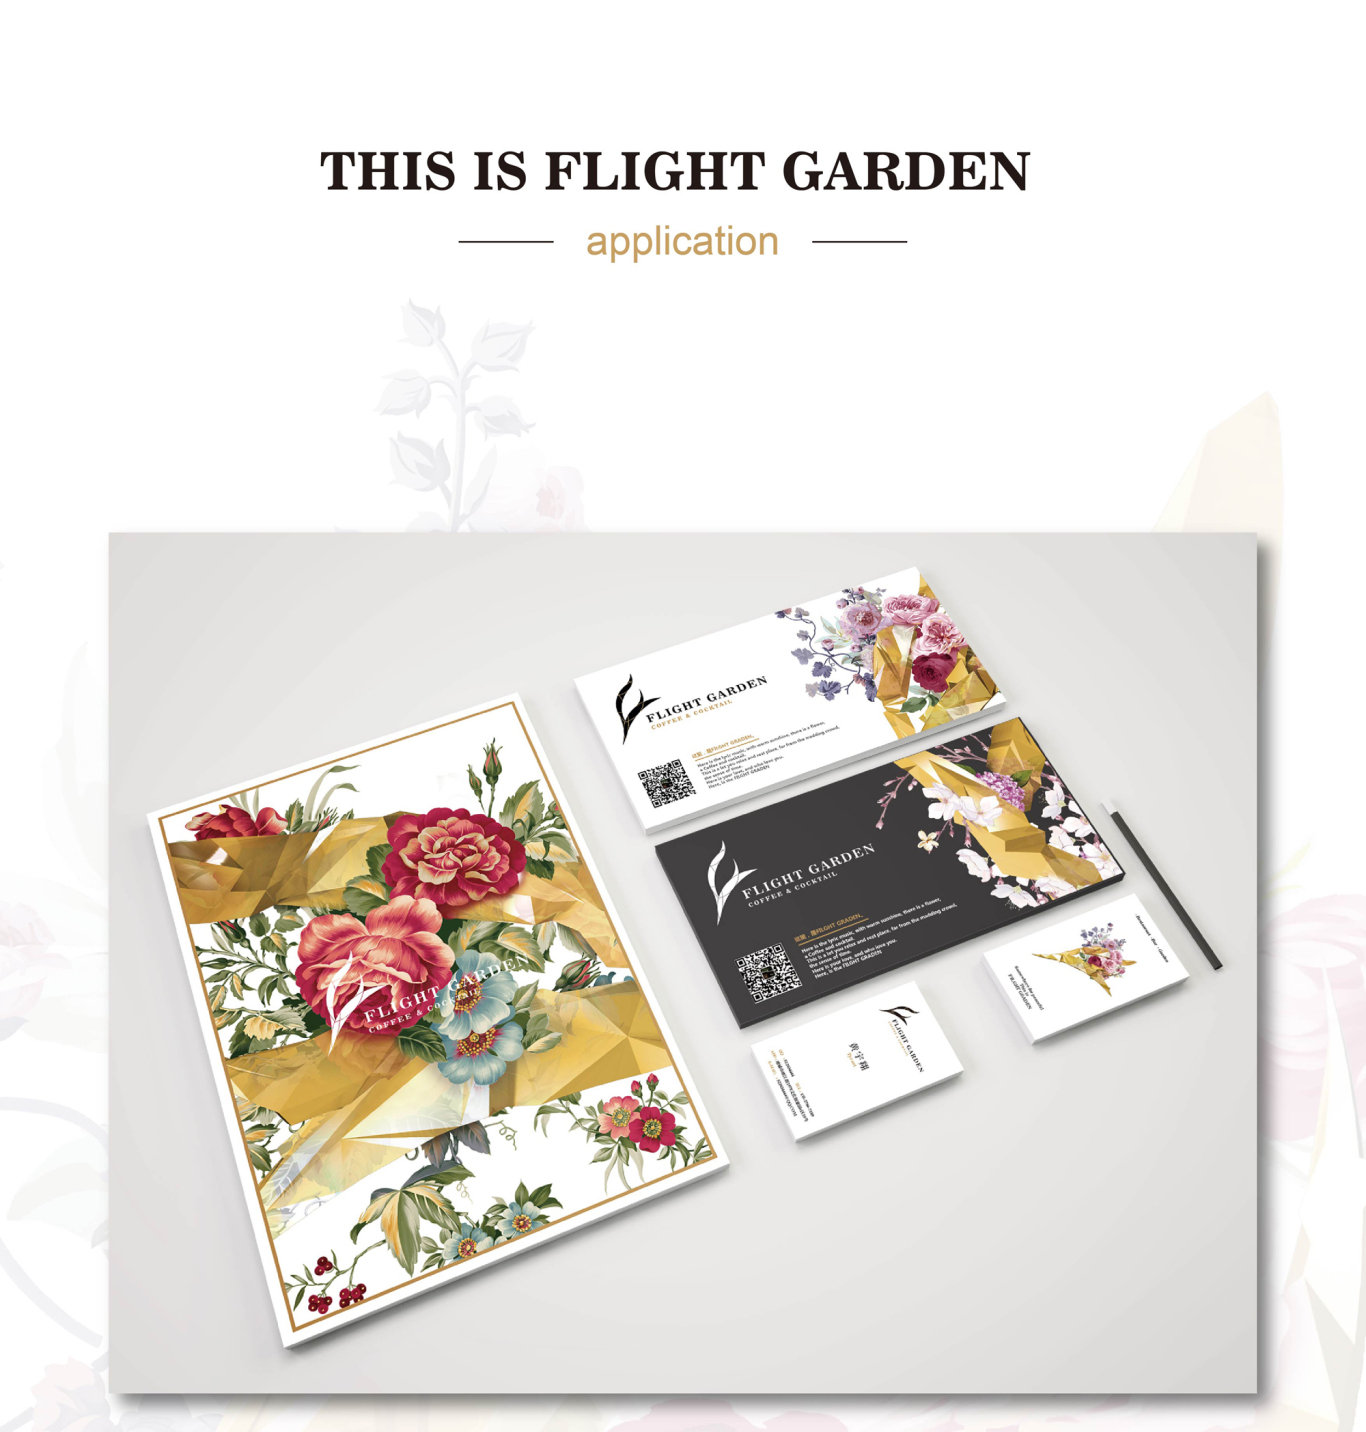 flight garden品牌设计图5